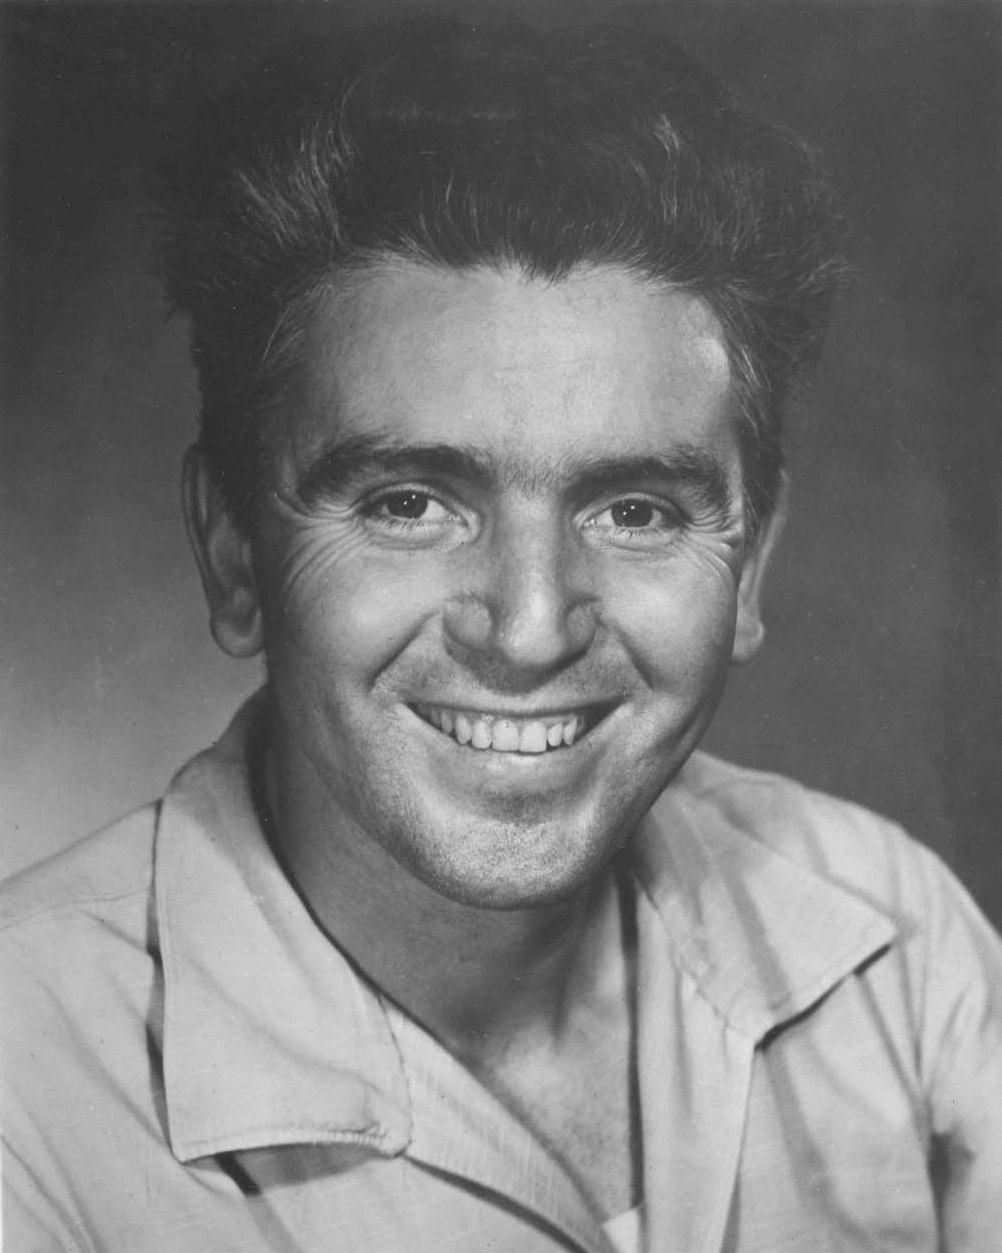 Image of Paul Alexander Bartlett from Wikidata